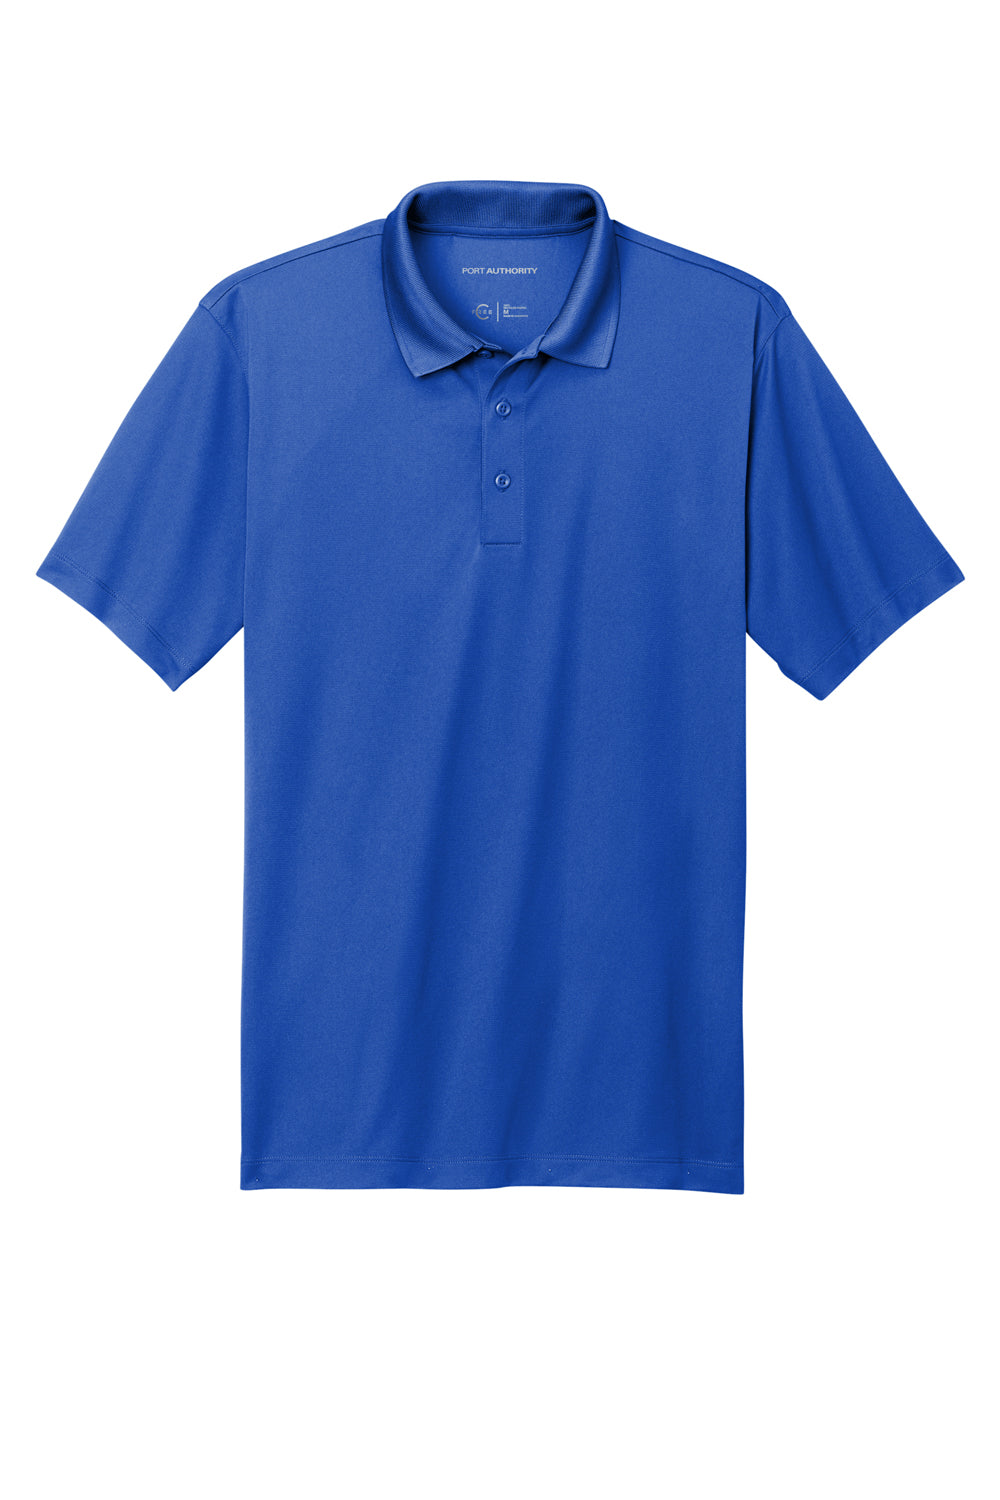 Port Authority K863 C-Free Performance Short Sleeve Polo Shirt True Royal Blue Flat Front